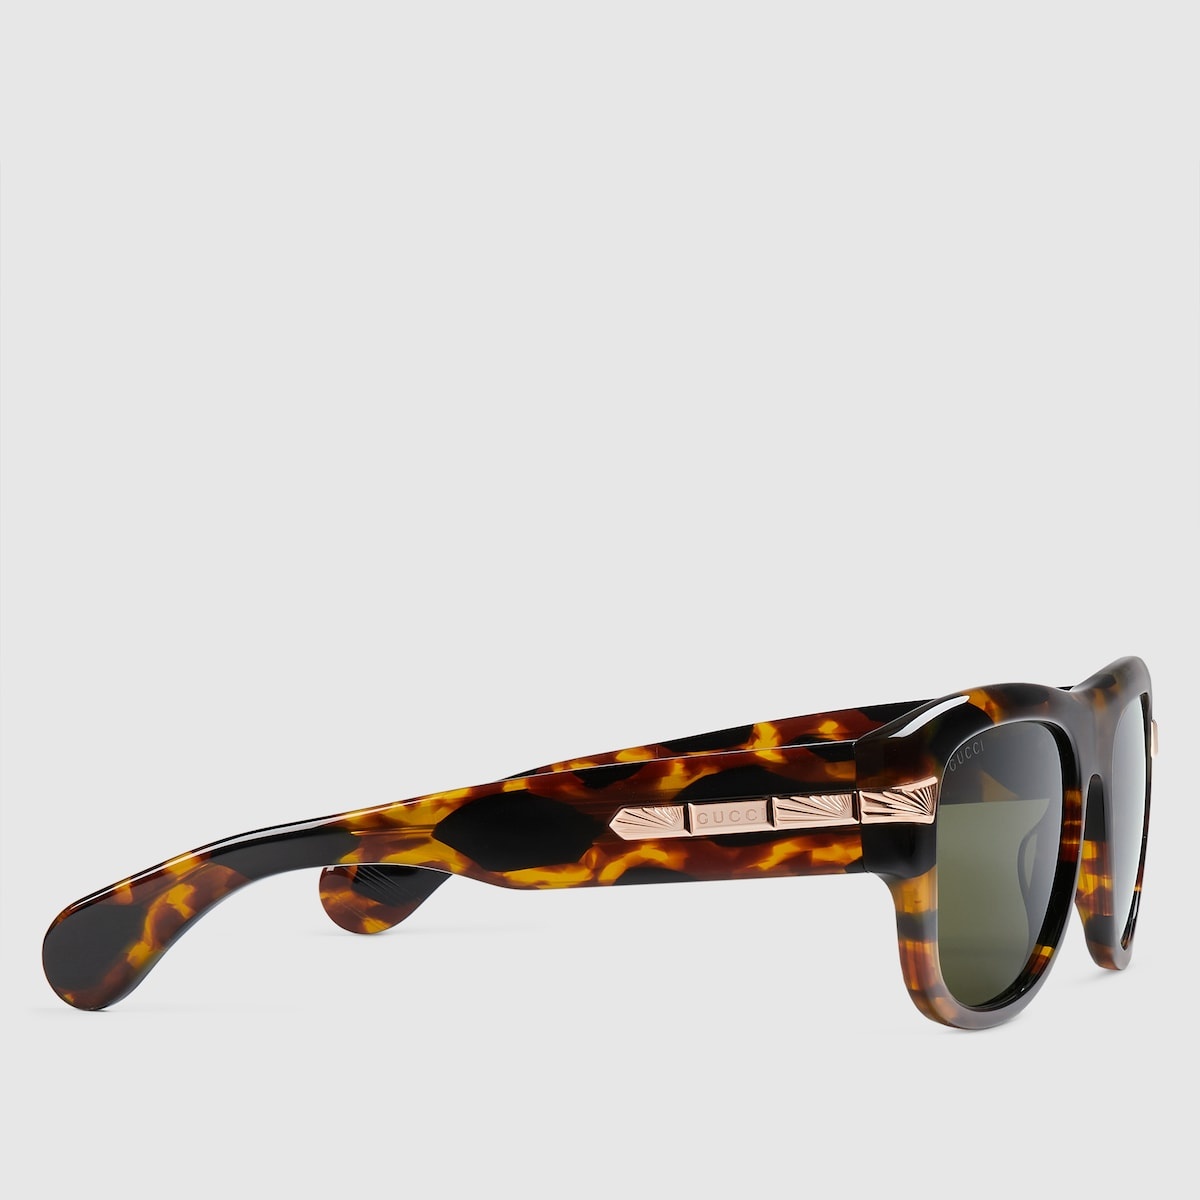 Squared frame sunglasses - 2